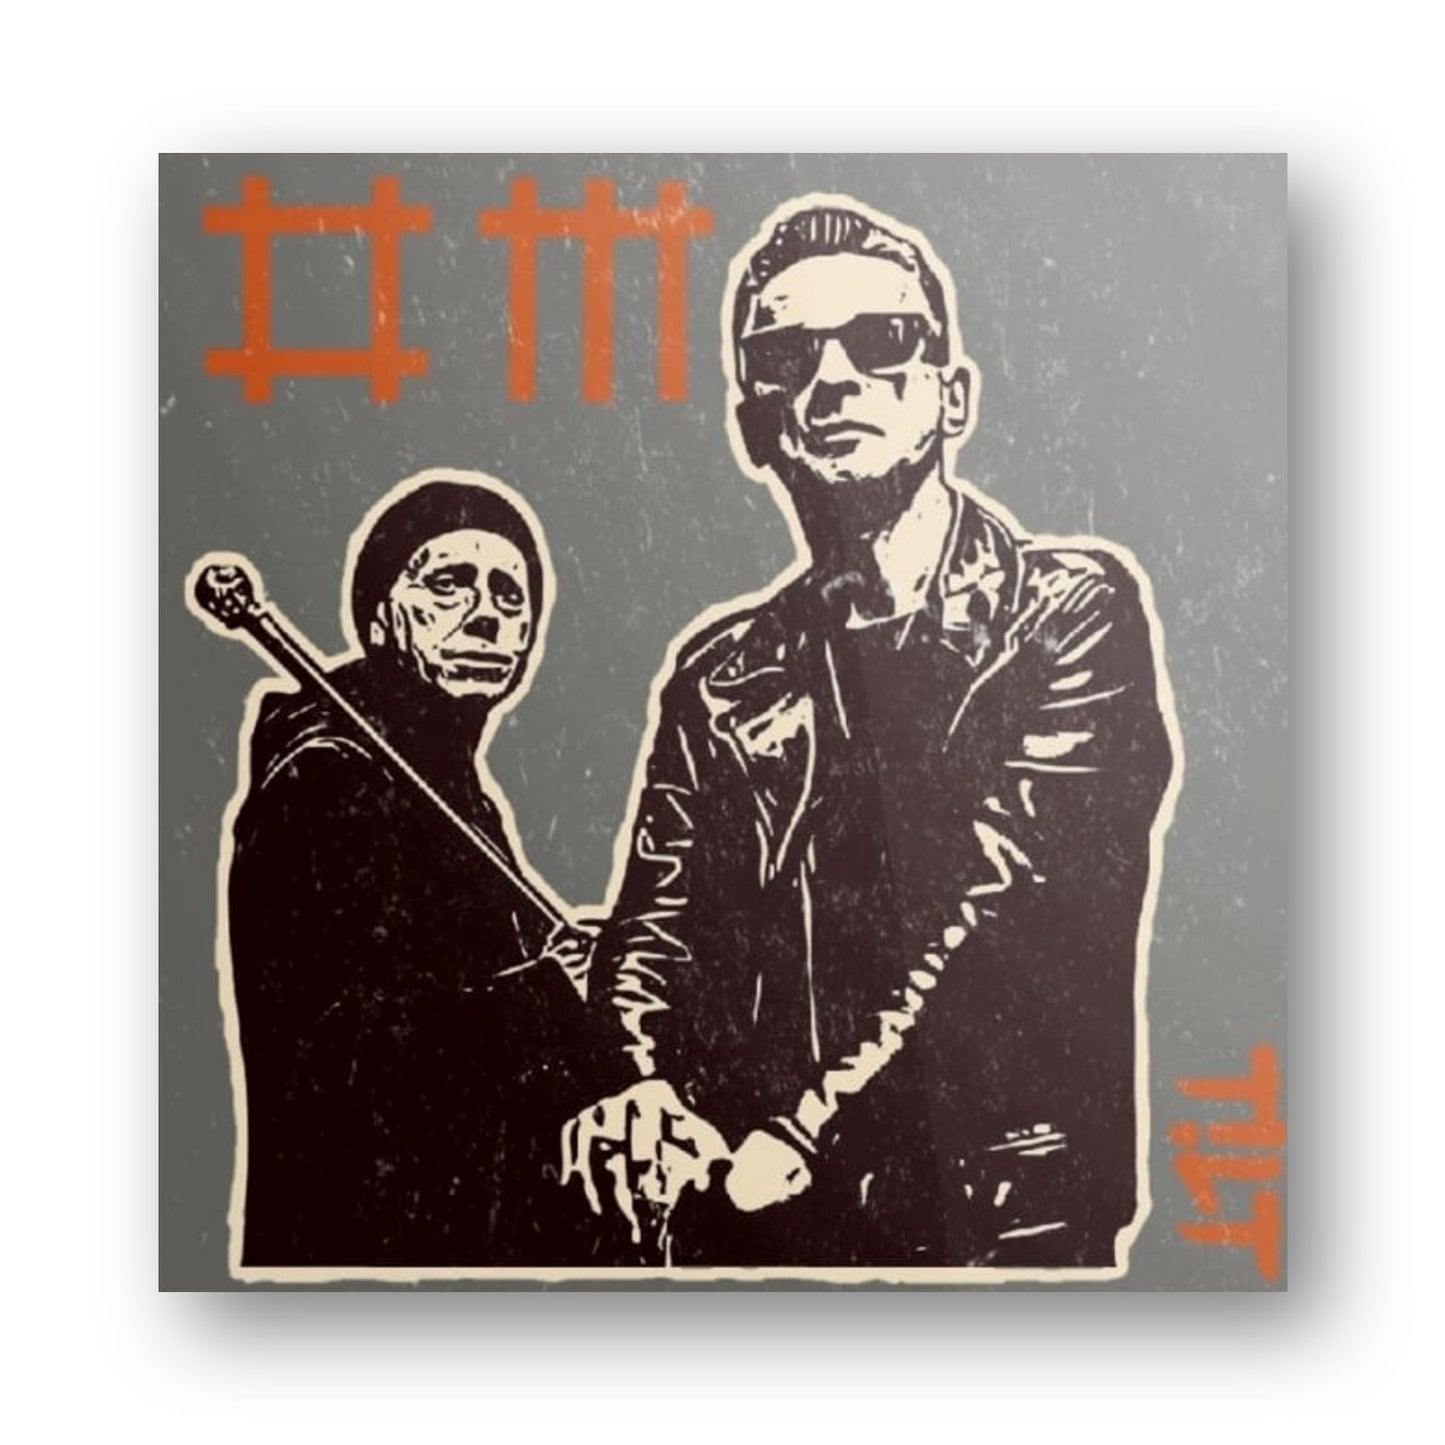 Tiny "T!LT rocks Depeche Mode 2" auf Relief-Metall